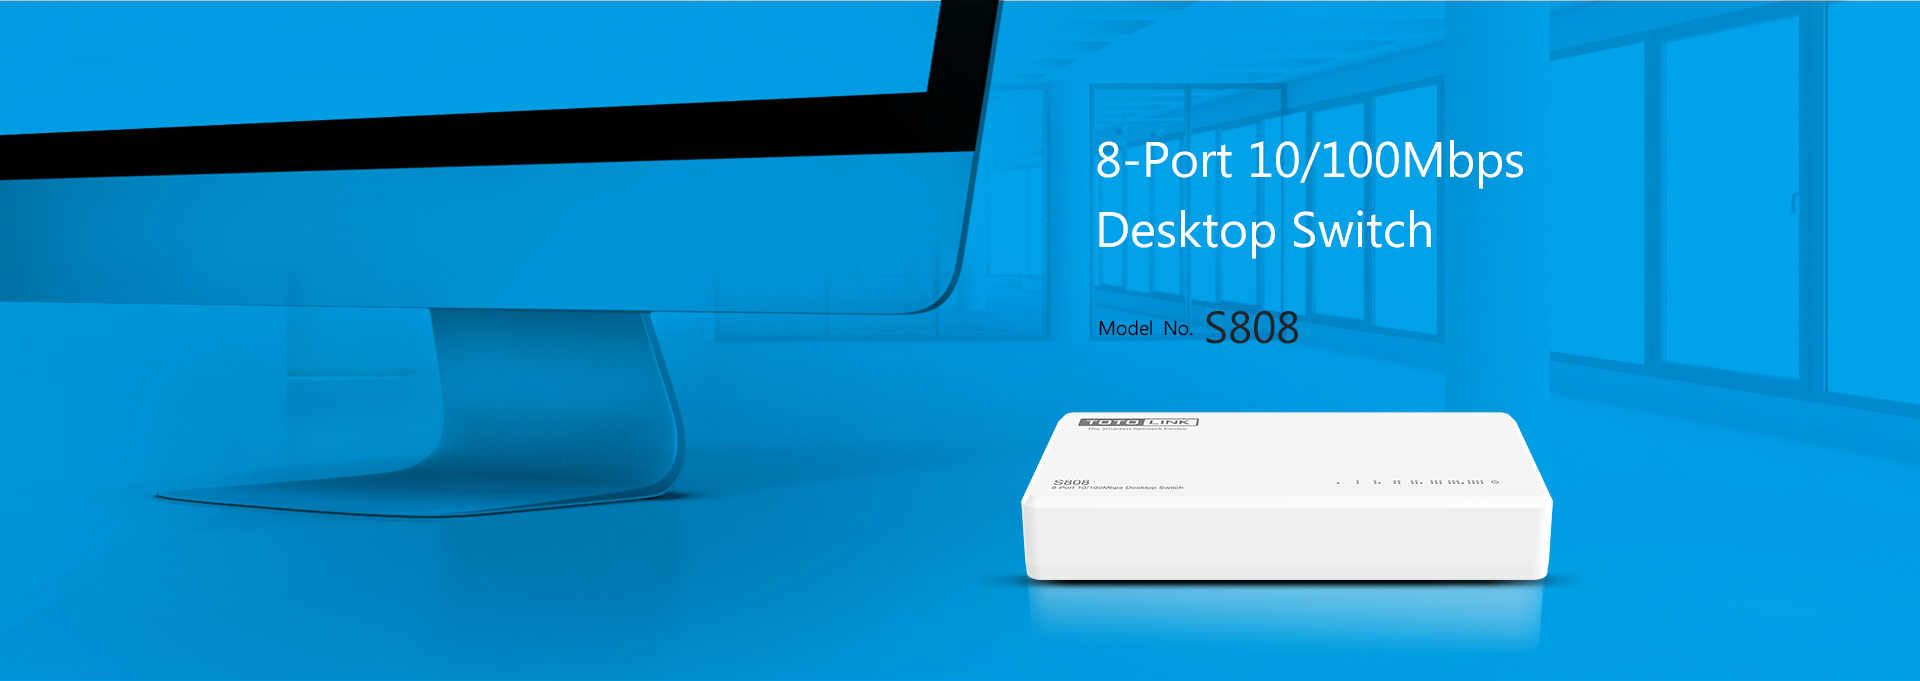  S808-8-Port-10/100Mbps-Desktop-switch 